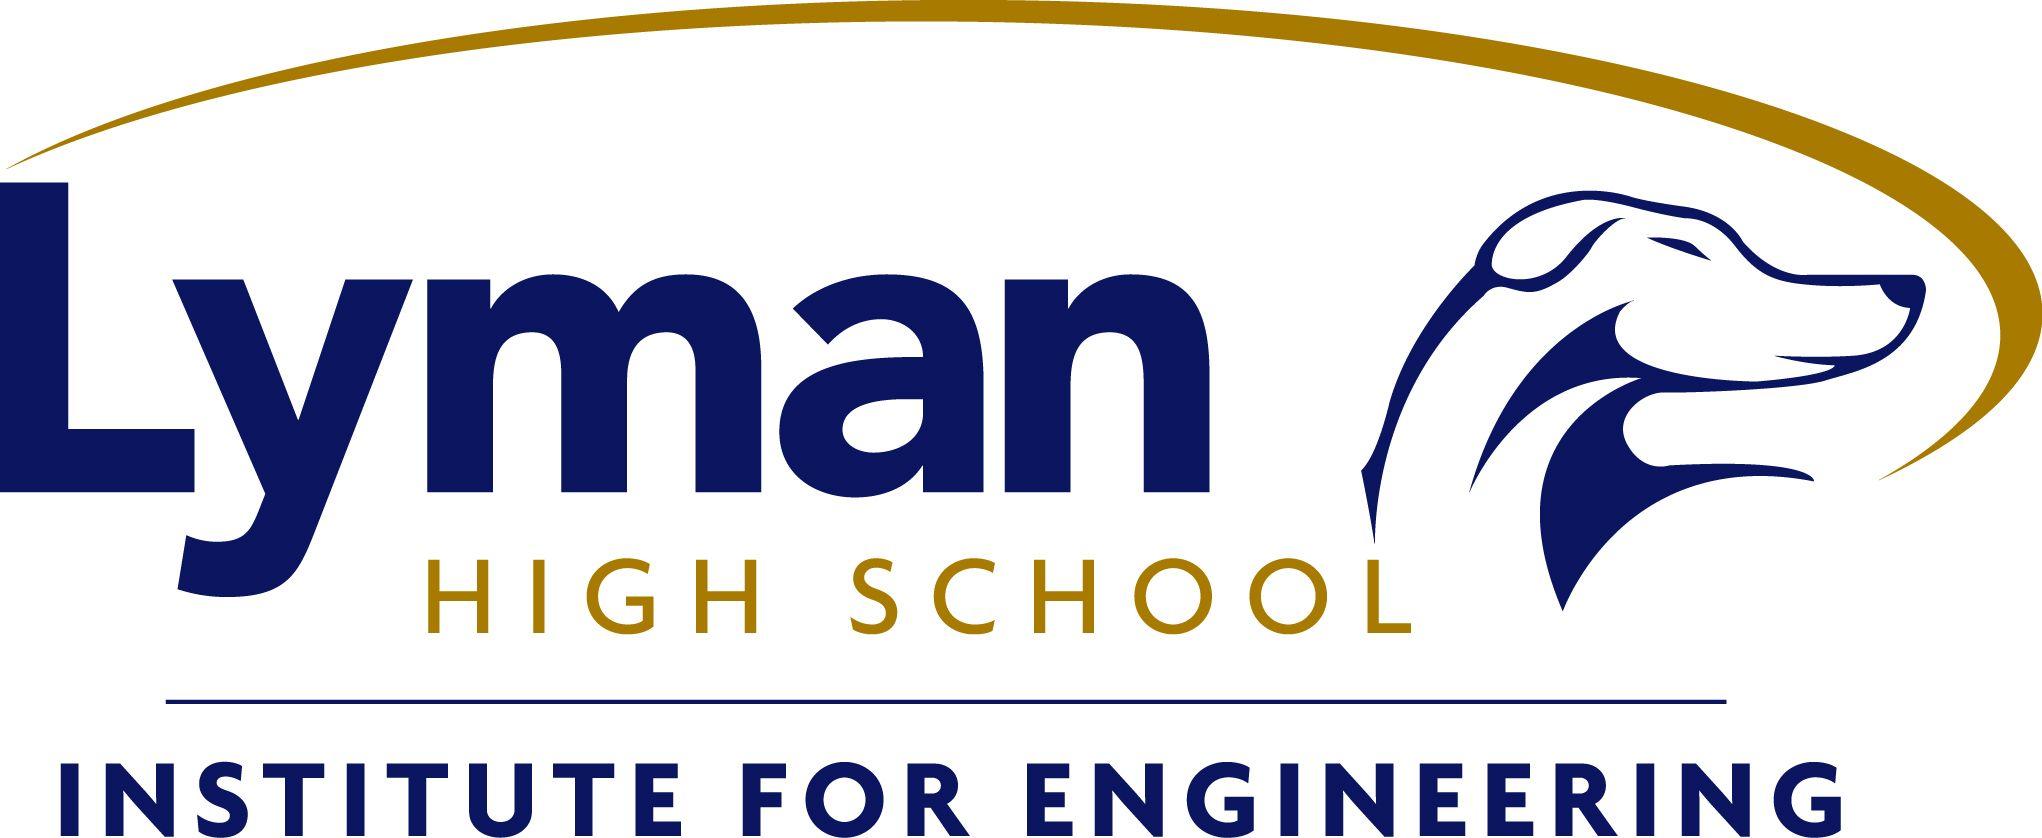 Lyman Logo - South Seminole Academy of Leadership, Law & Advanced Studies